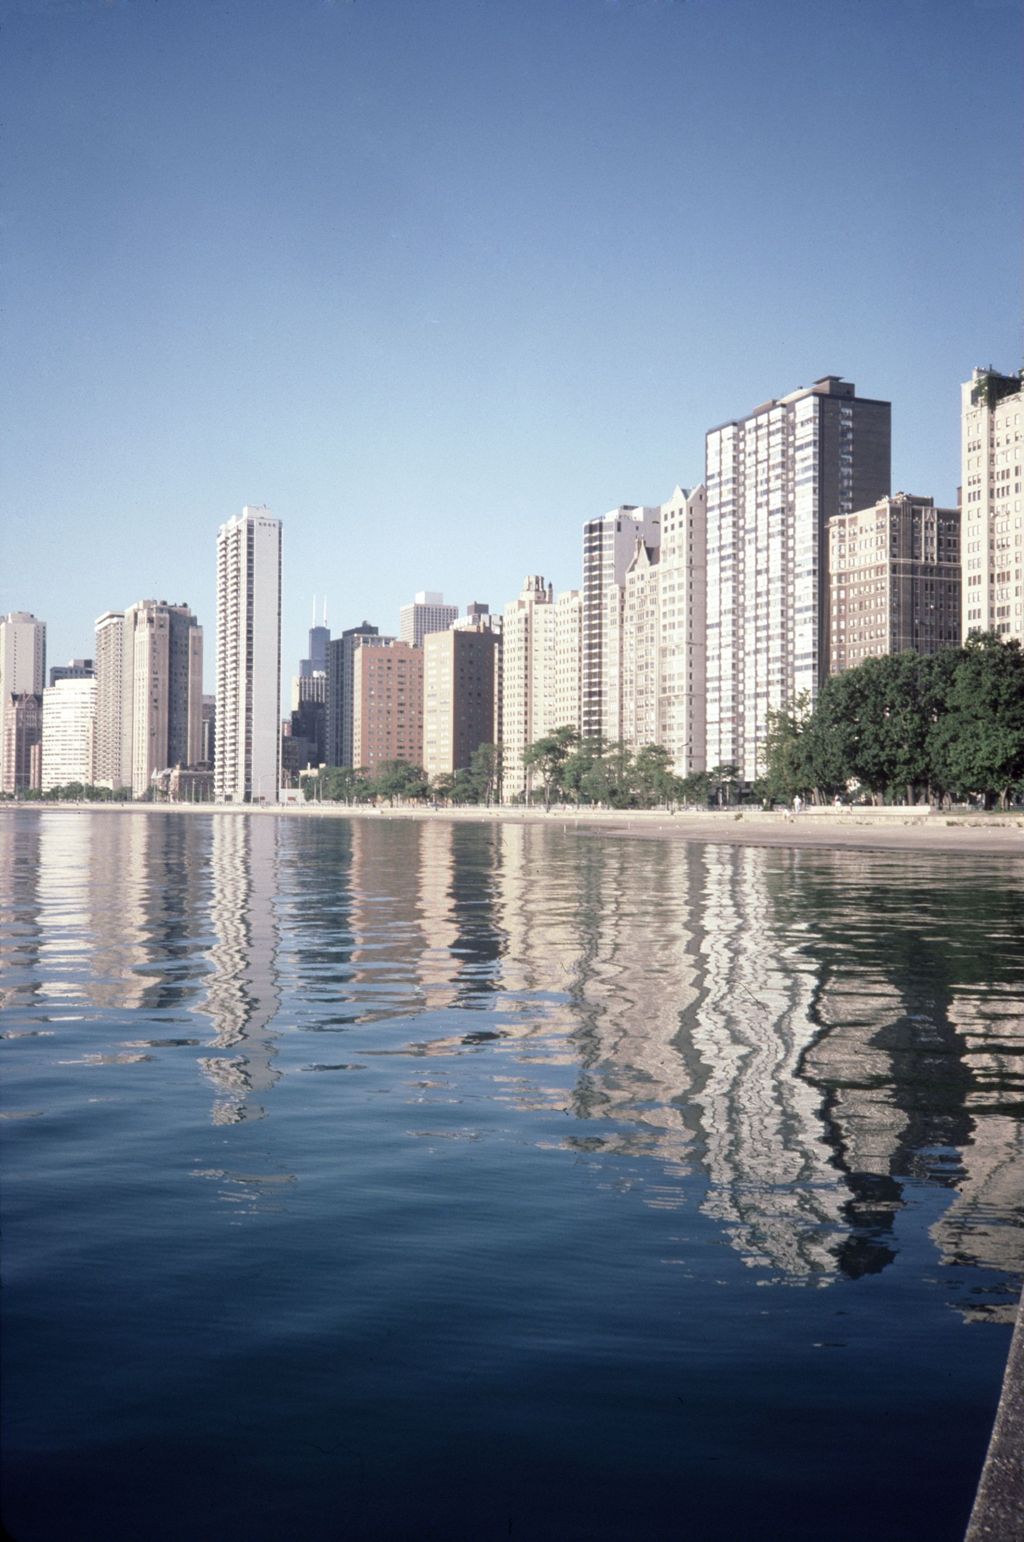 Miniature of High-rise apartments along Lake Michigan